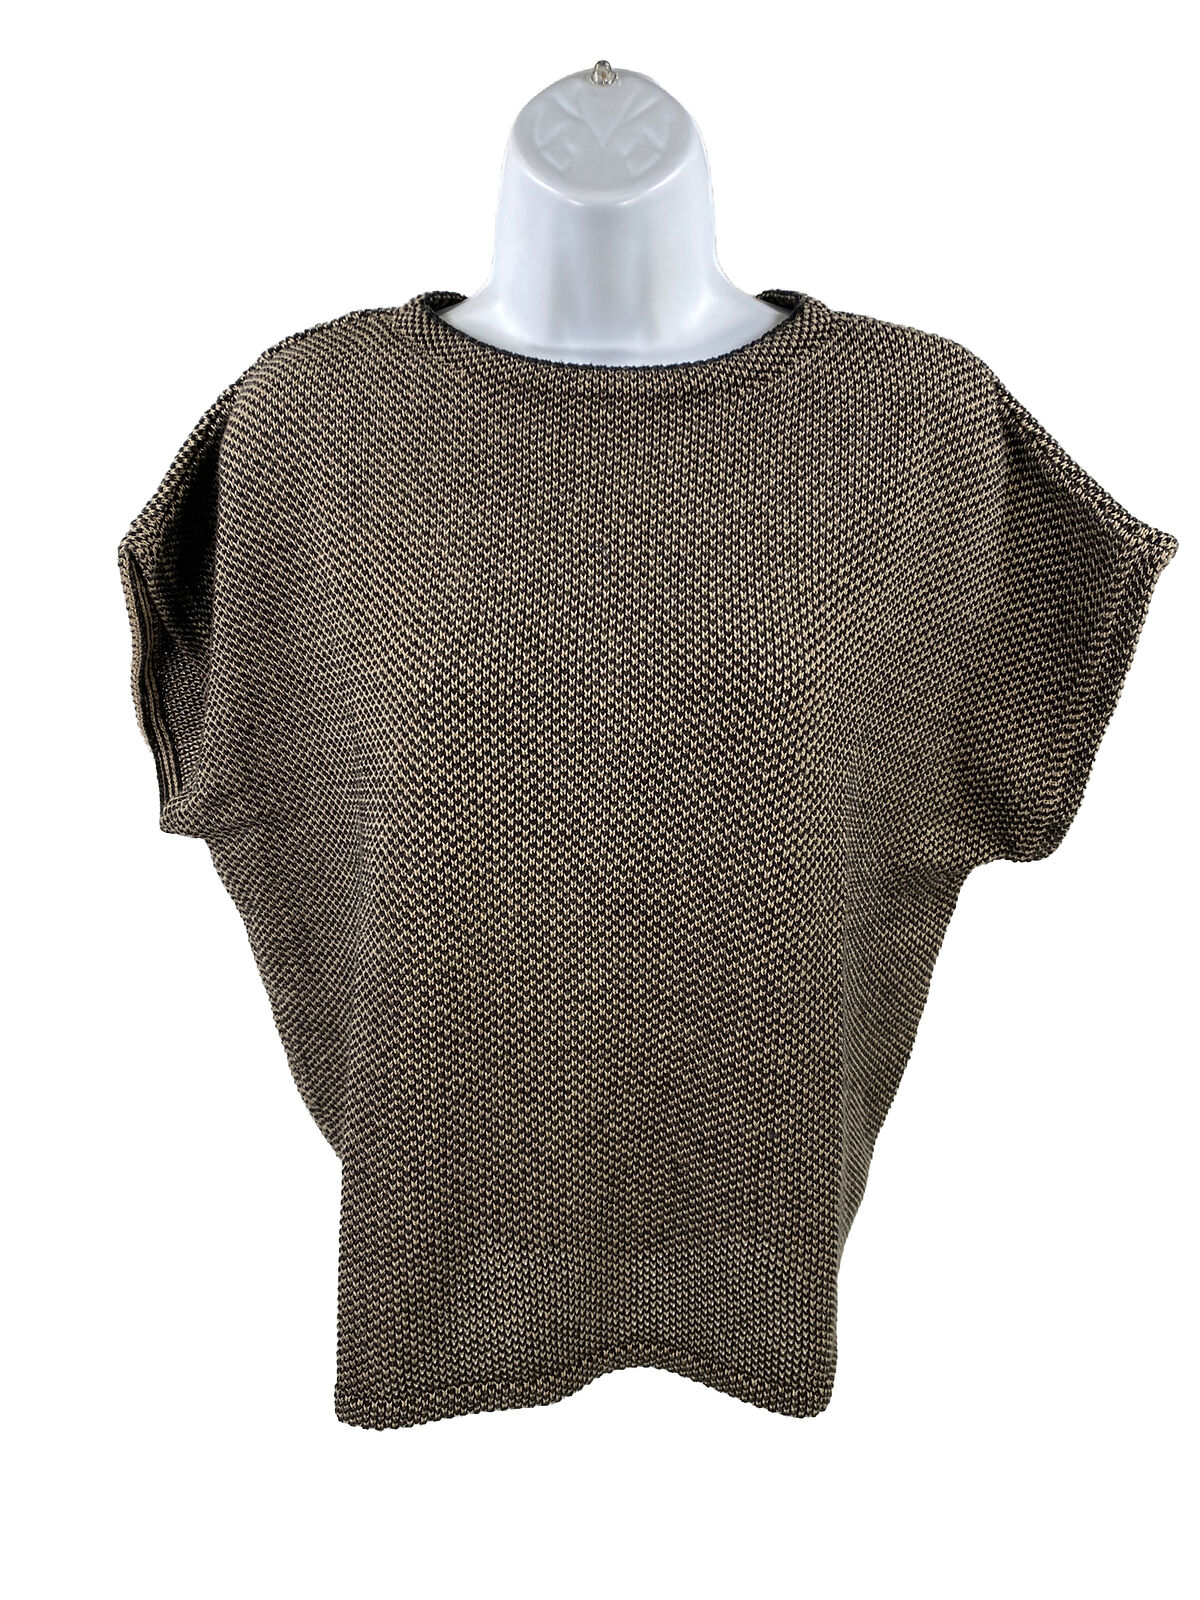 Chris Triola Women's Black/ Brown Cotton Short Sleeve Shell Sweater - S